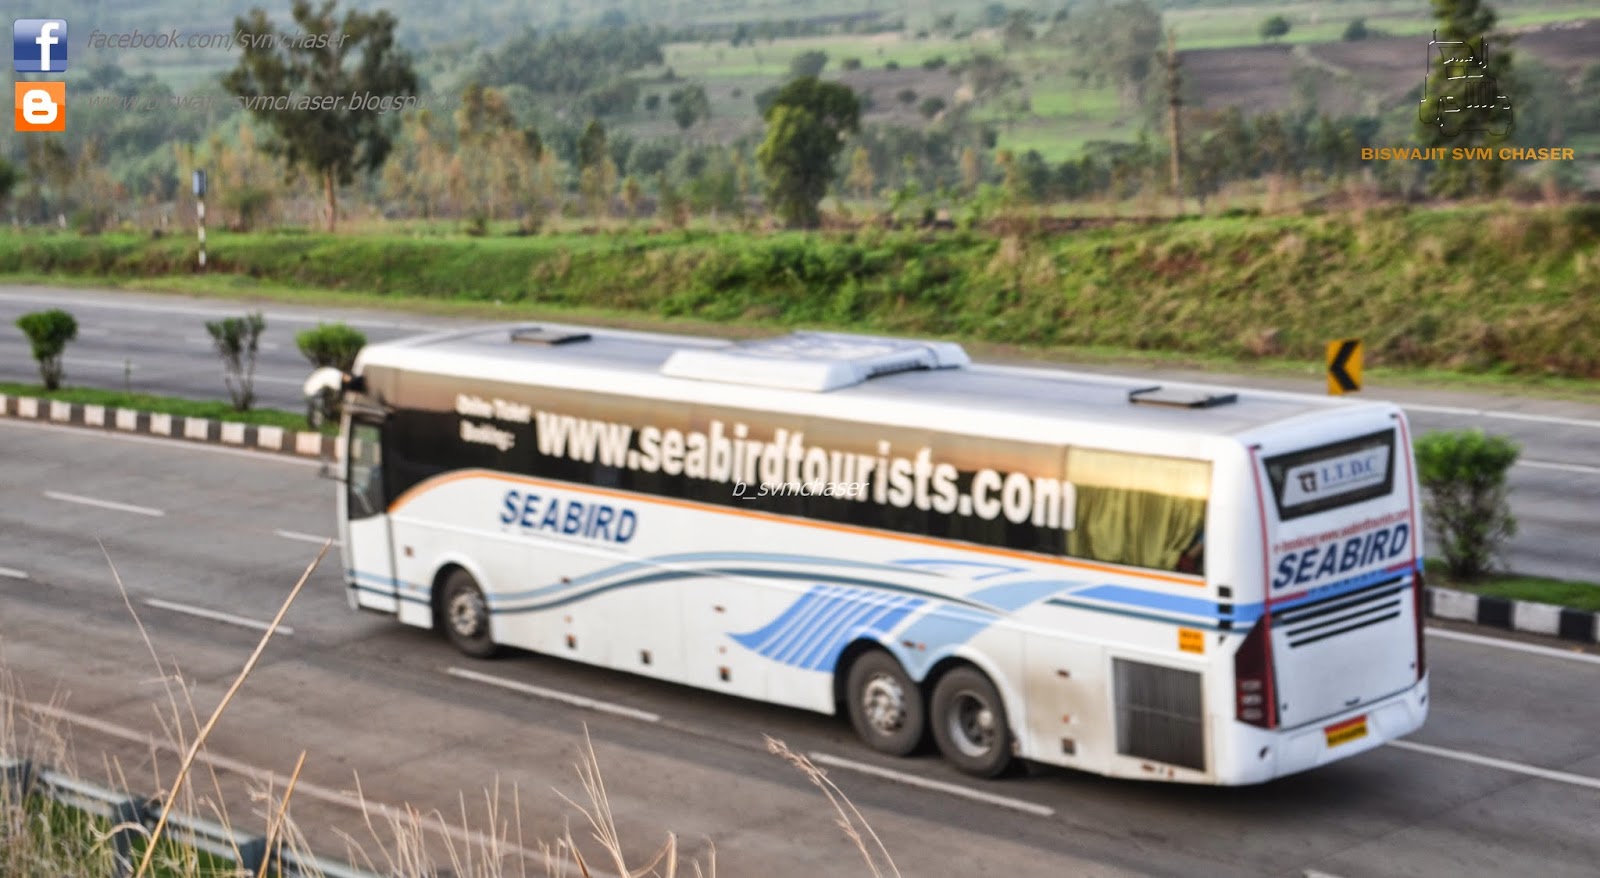 Seabird Tourists Volvo B R Multiaxle Semi Sleeper Biswajit Svm Chaser